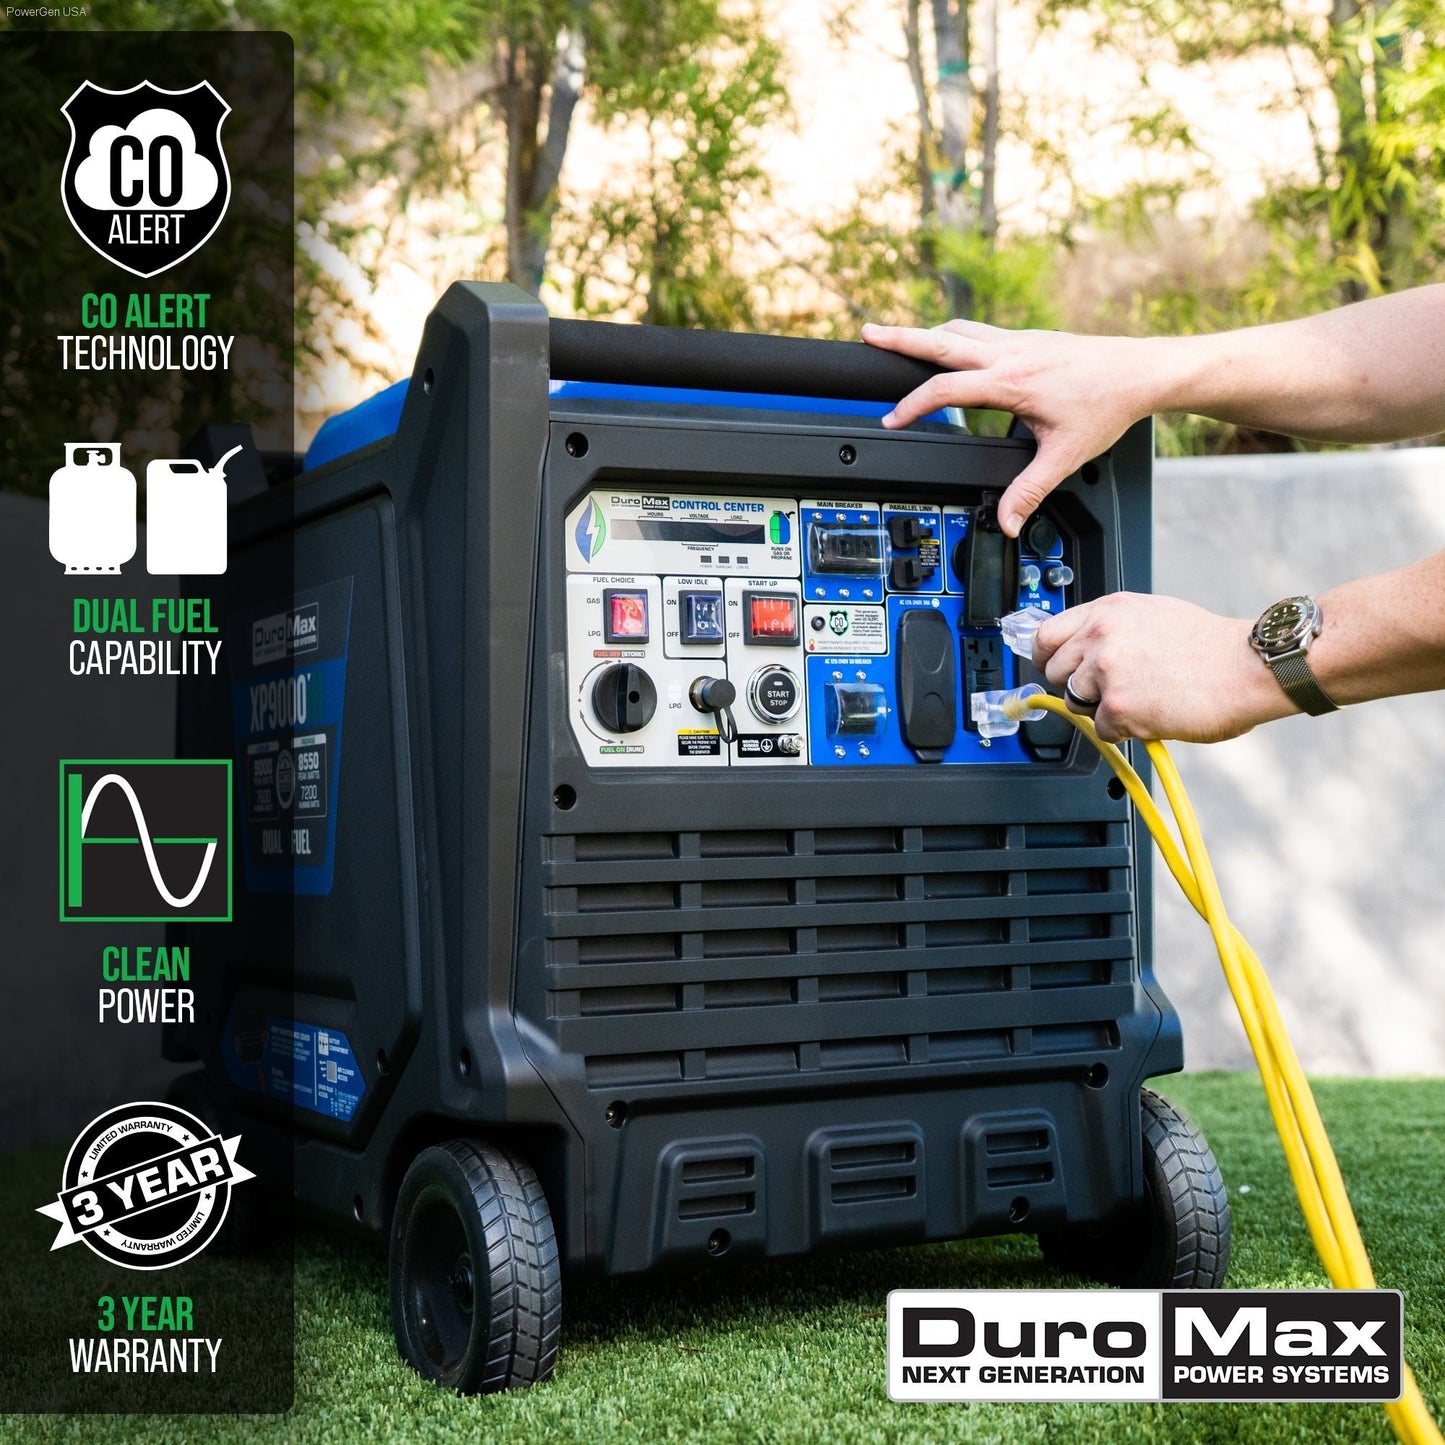 Dual Fuel Hybrid - DuroMax XP9000iH 9,000 Watt Dual Fuel Portable Home Power Backup Inverter Generator W/ CO Alert